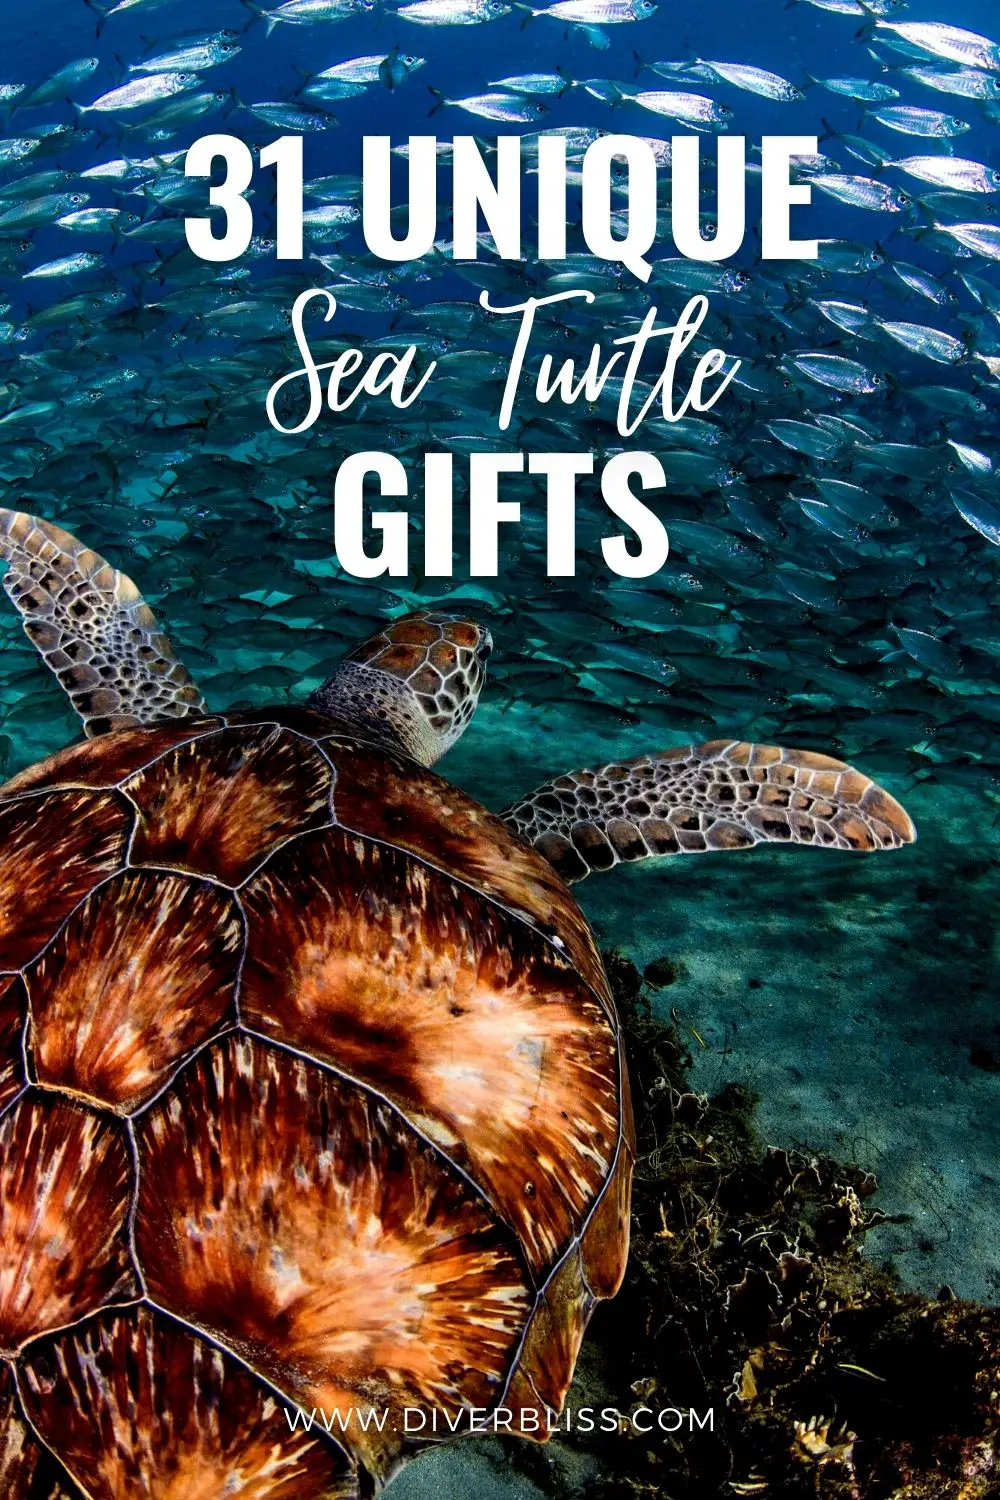 Sea Turtle HoodieTanktopLegging Gift For Lover Turtle Turtle Ocean Fans TDT152010A35